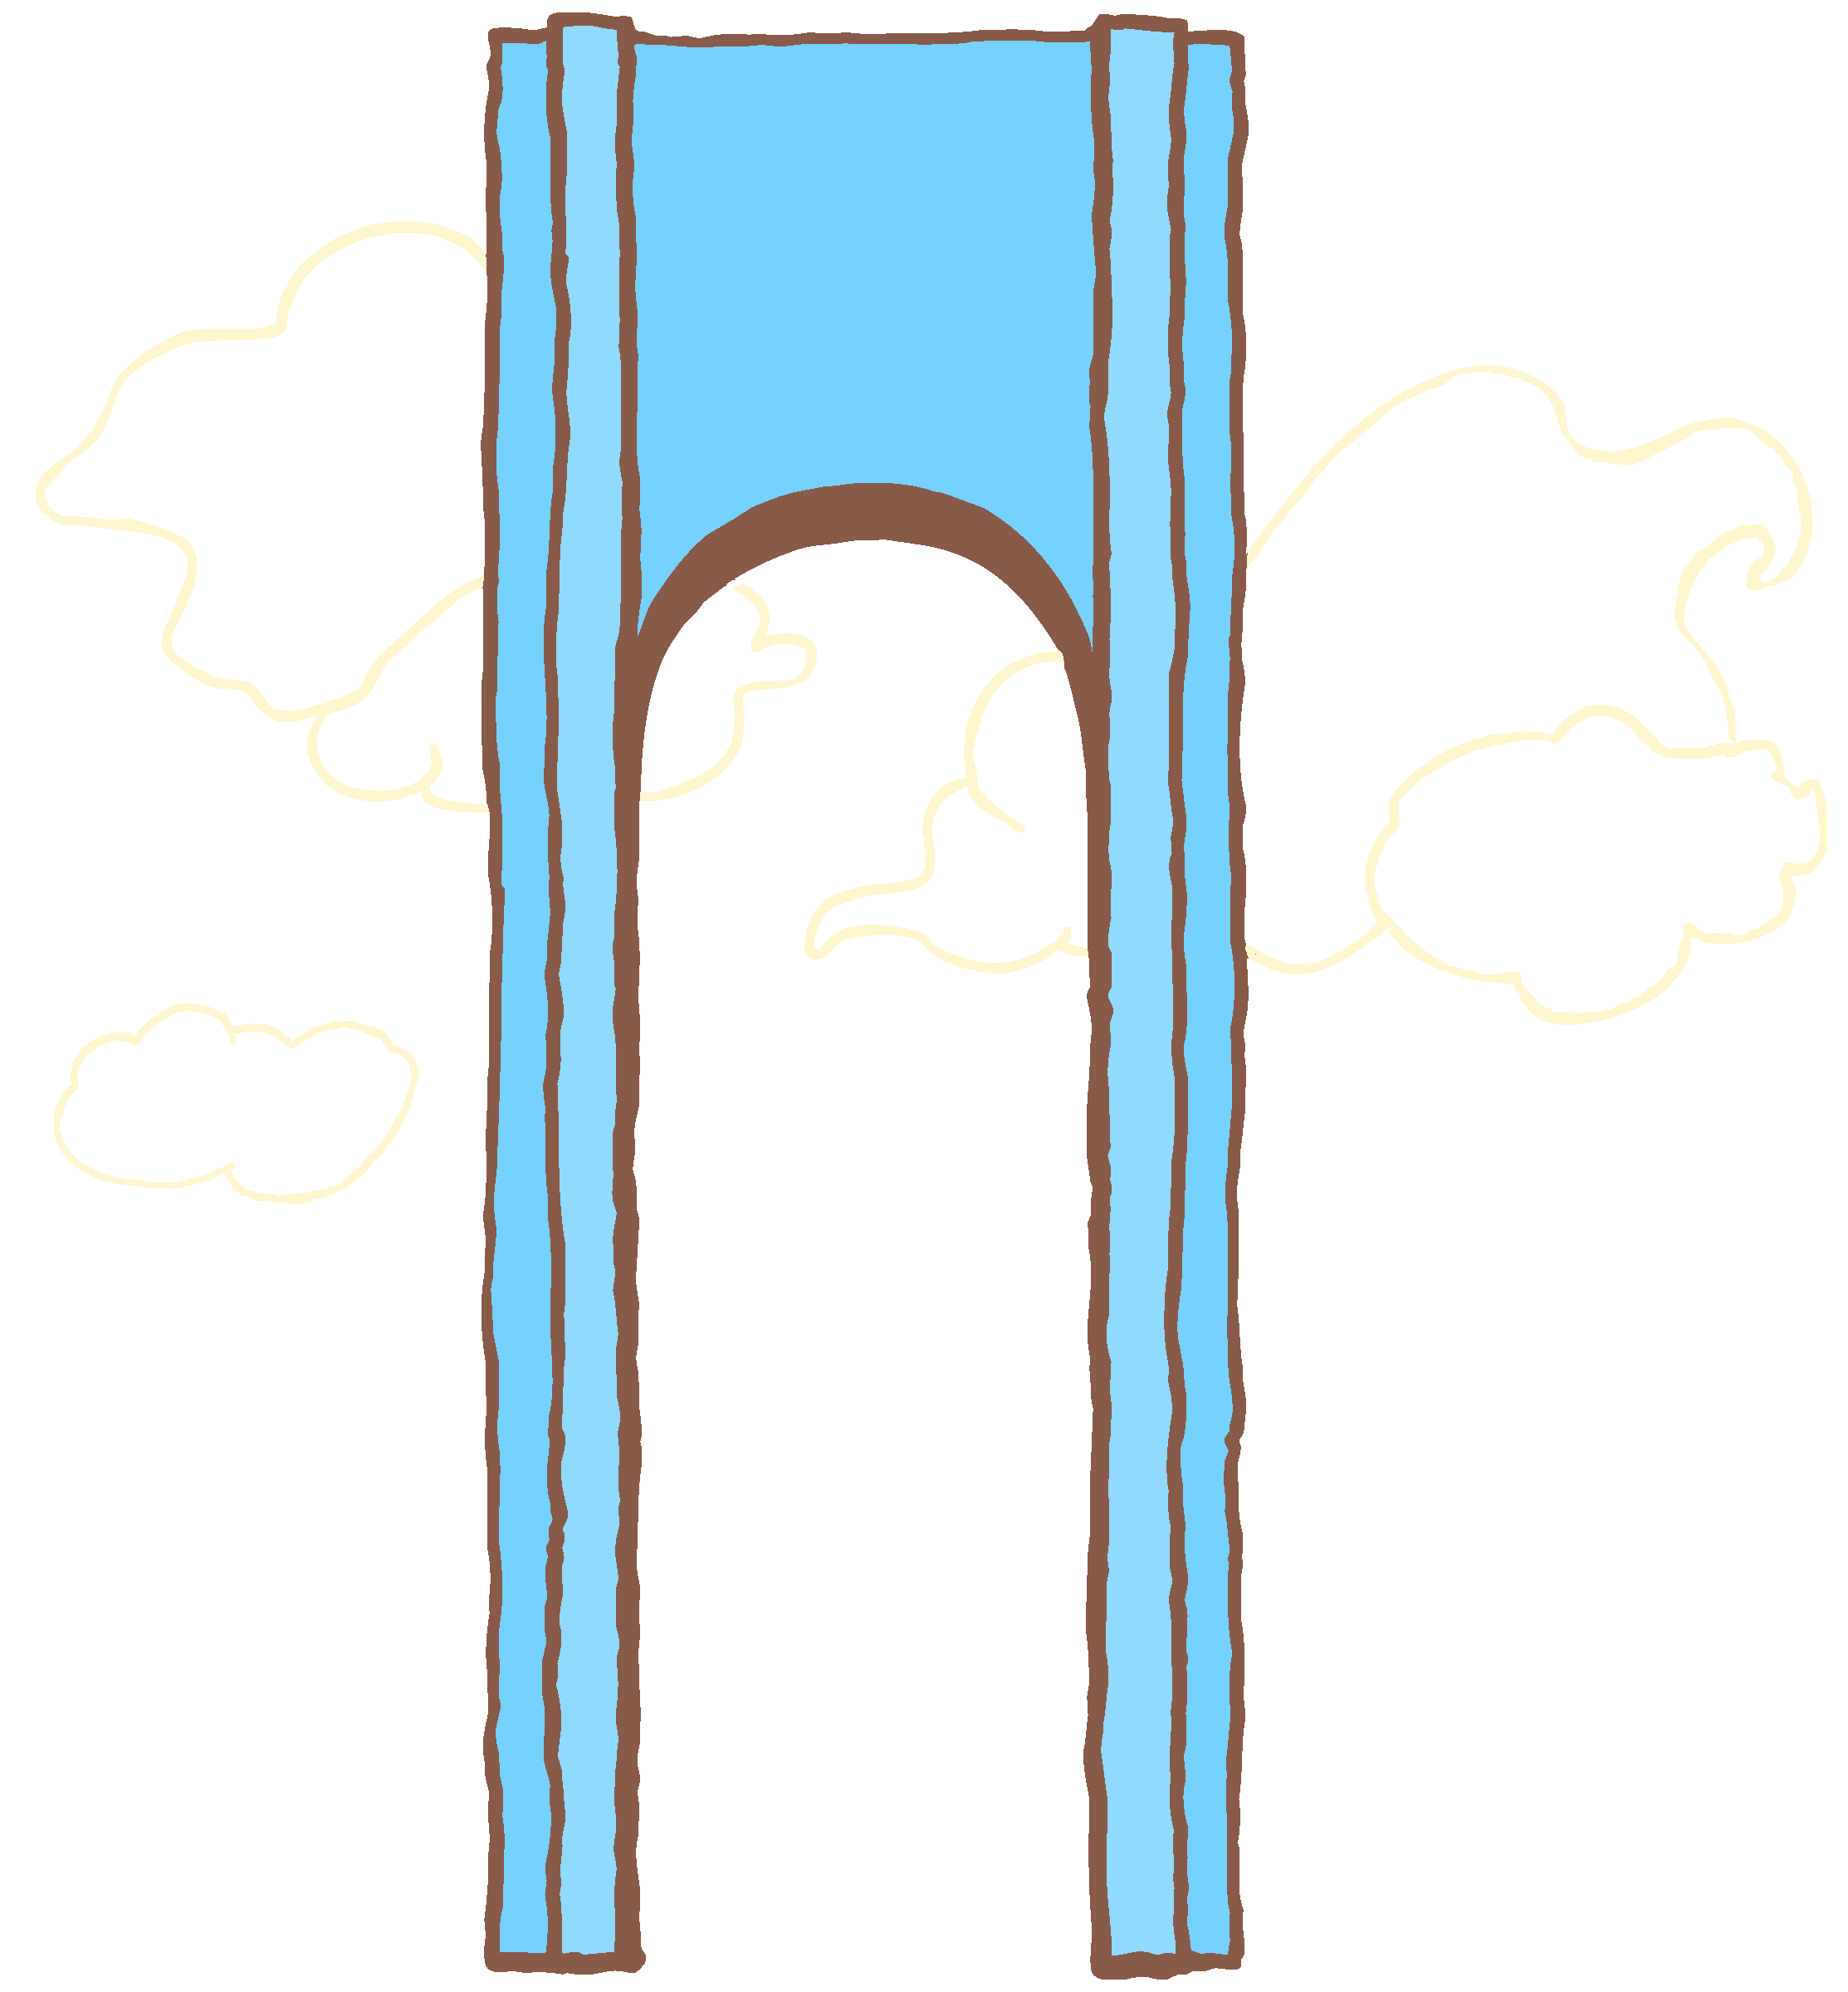 This is a cartoon version of the Verrazzano bridge.